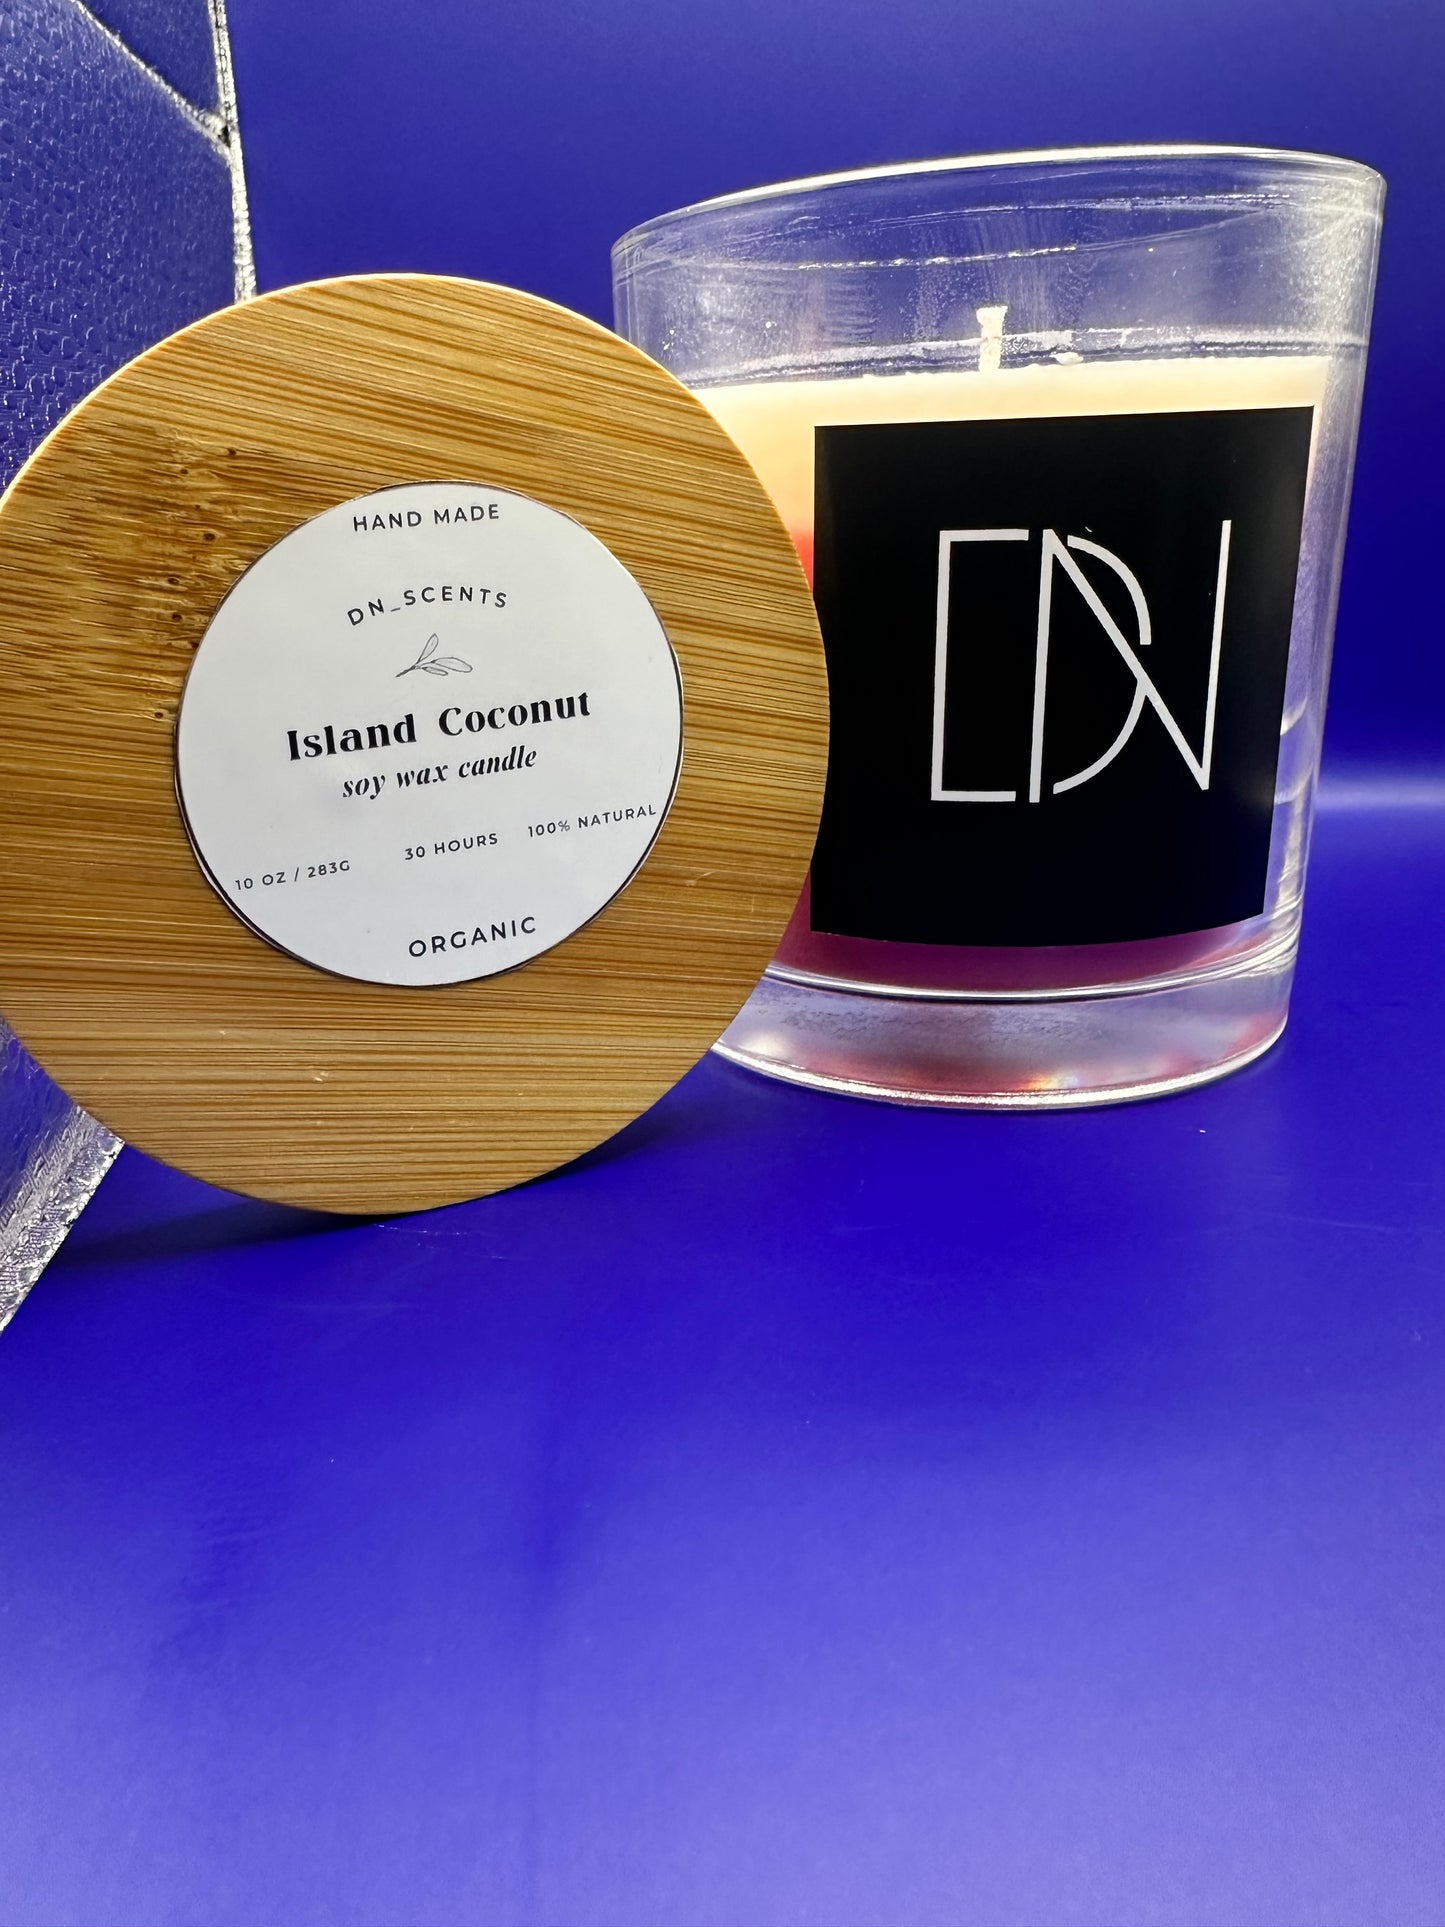 Island Coconut Candle